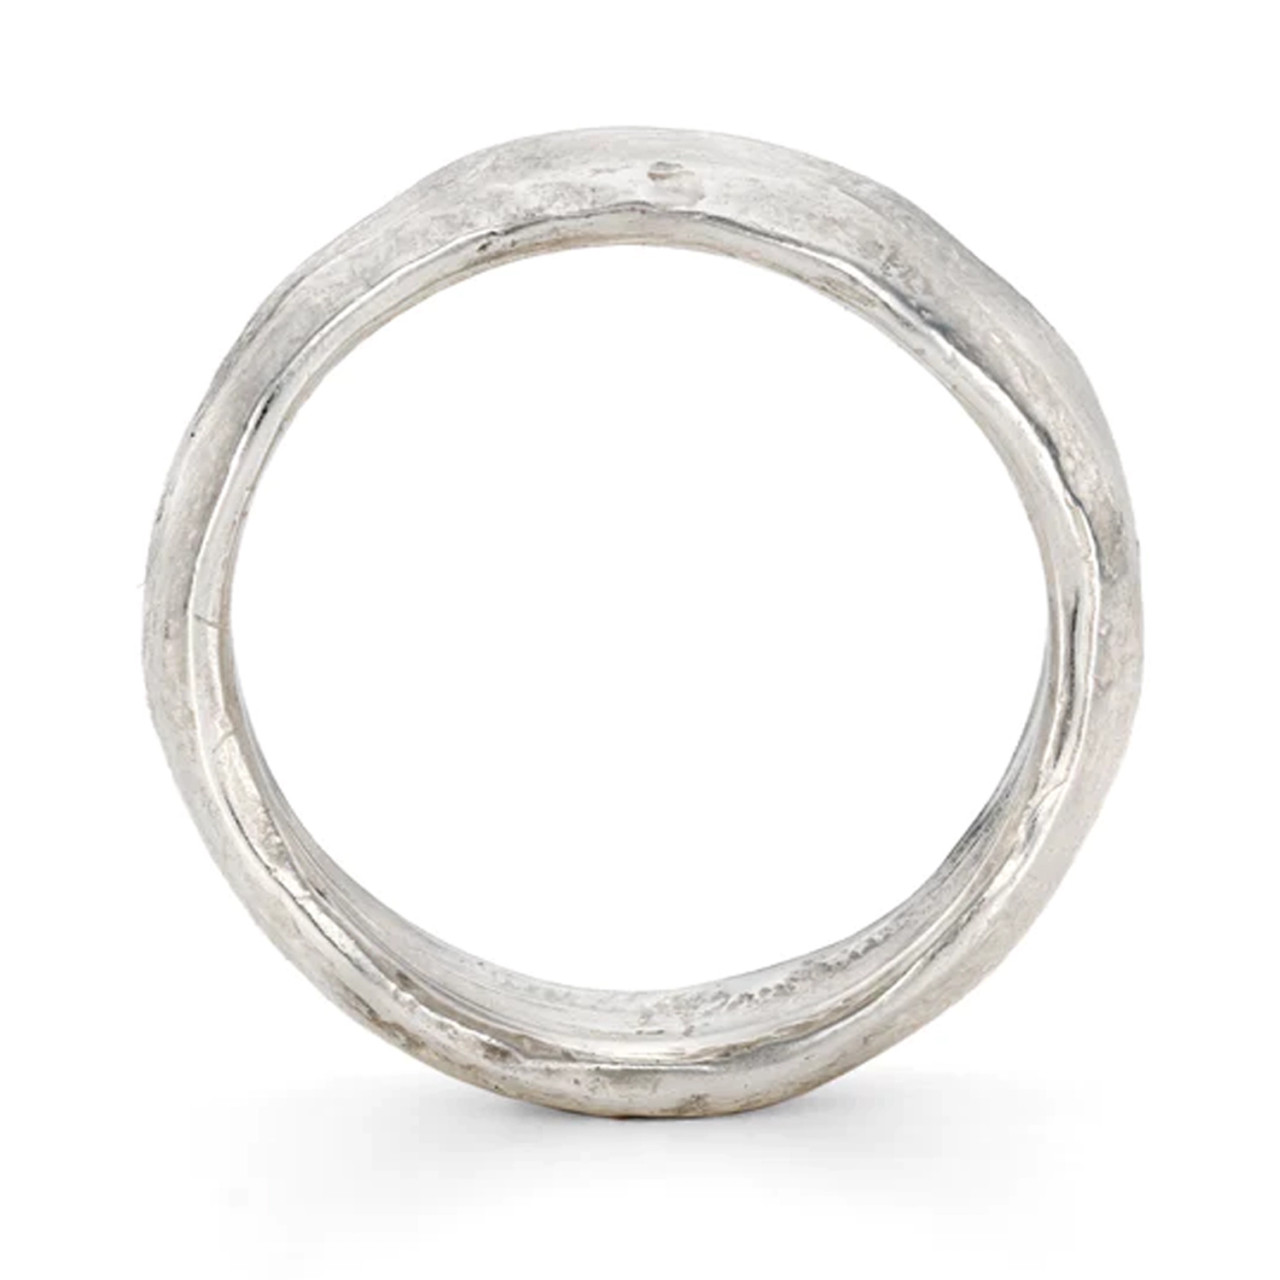 Wide Silver Sculptural Rock Ring, Emily Nixon, tomfoolery